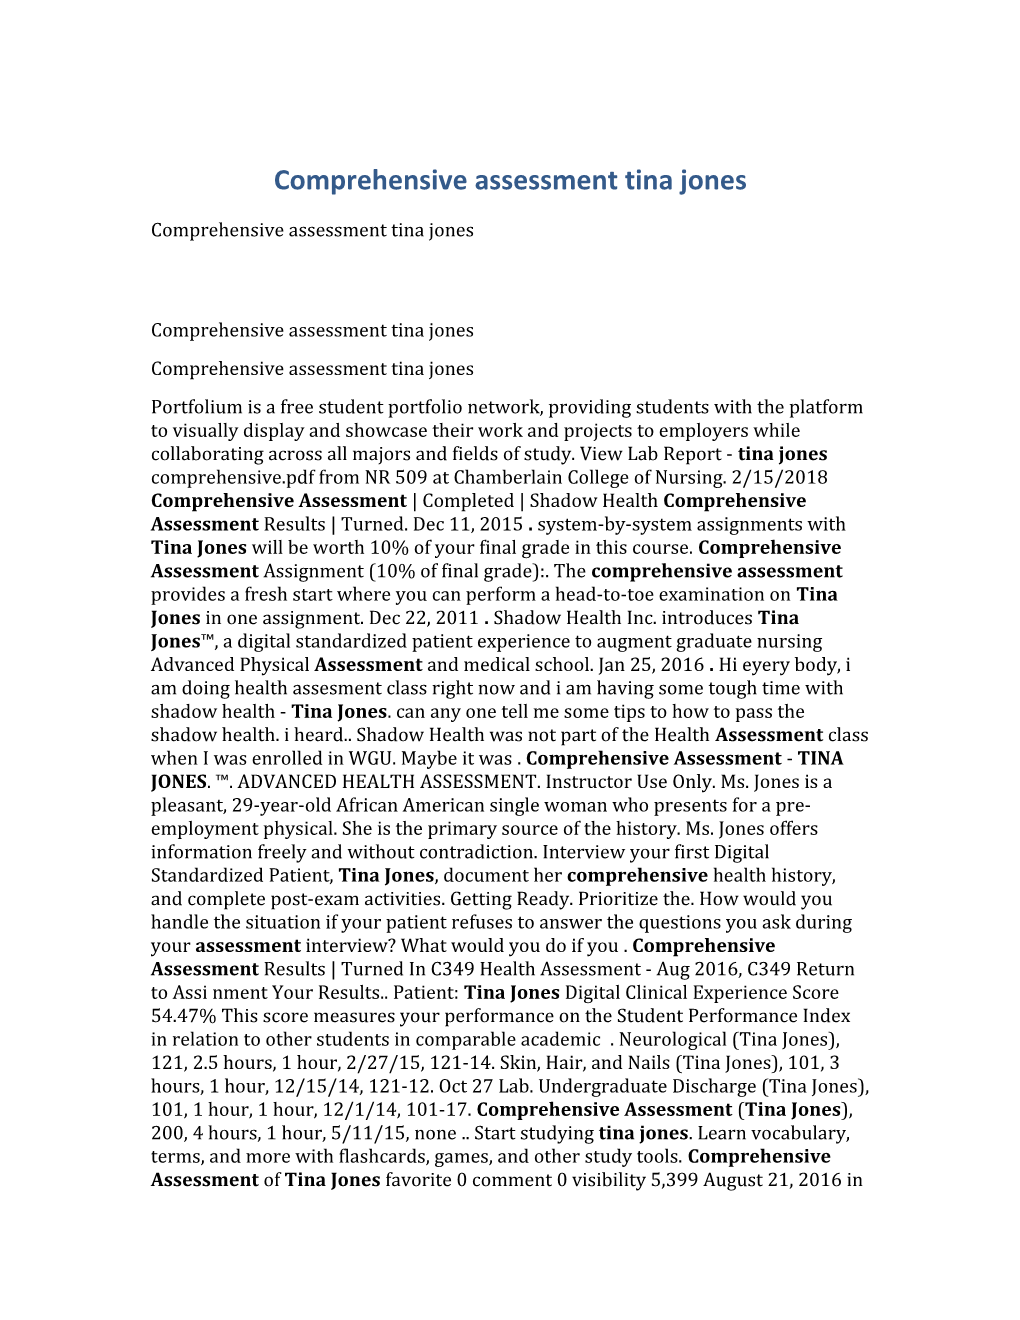 Comprehensive Assessment Tina Jones